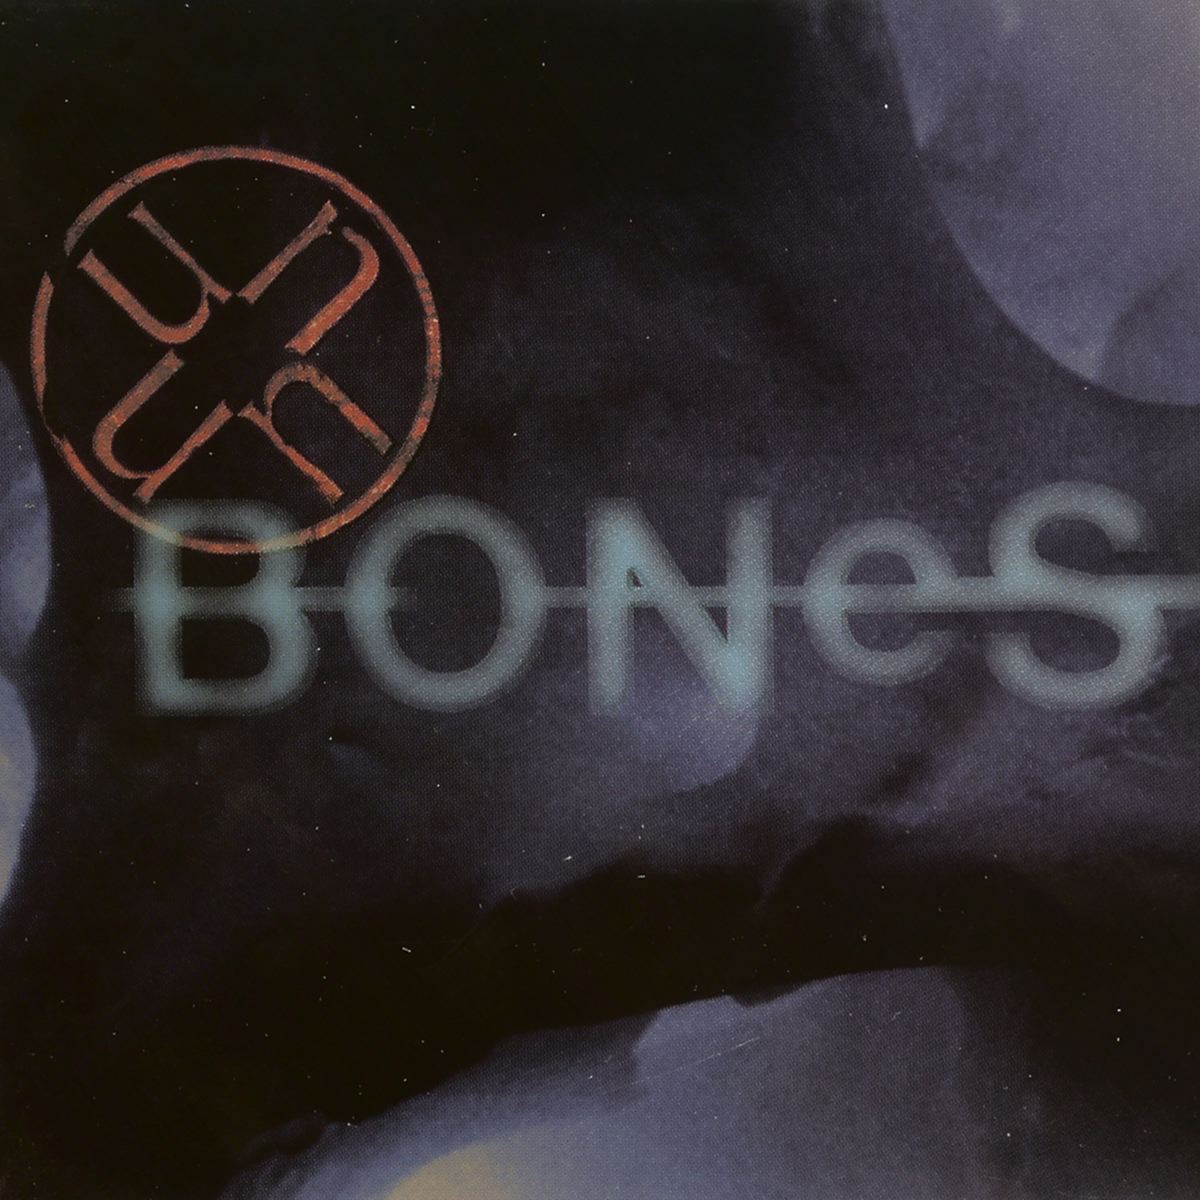 Bones [1998]